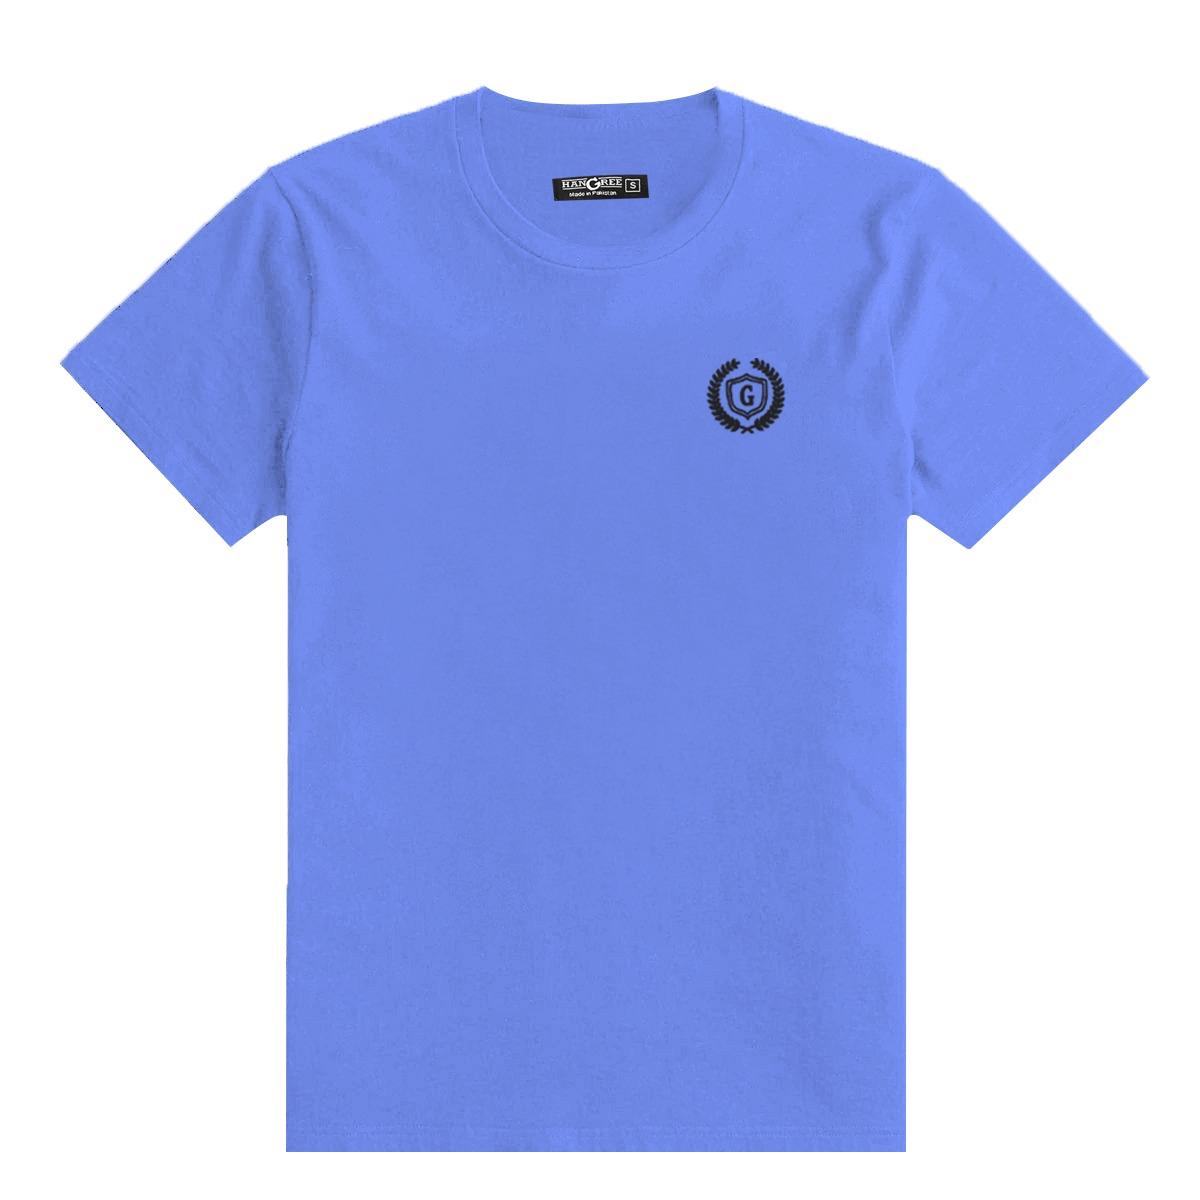 HG Signature Emb Round Neck Tee Shirt - Lotus Blue